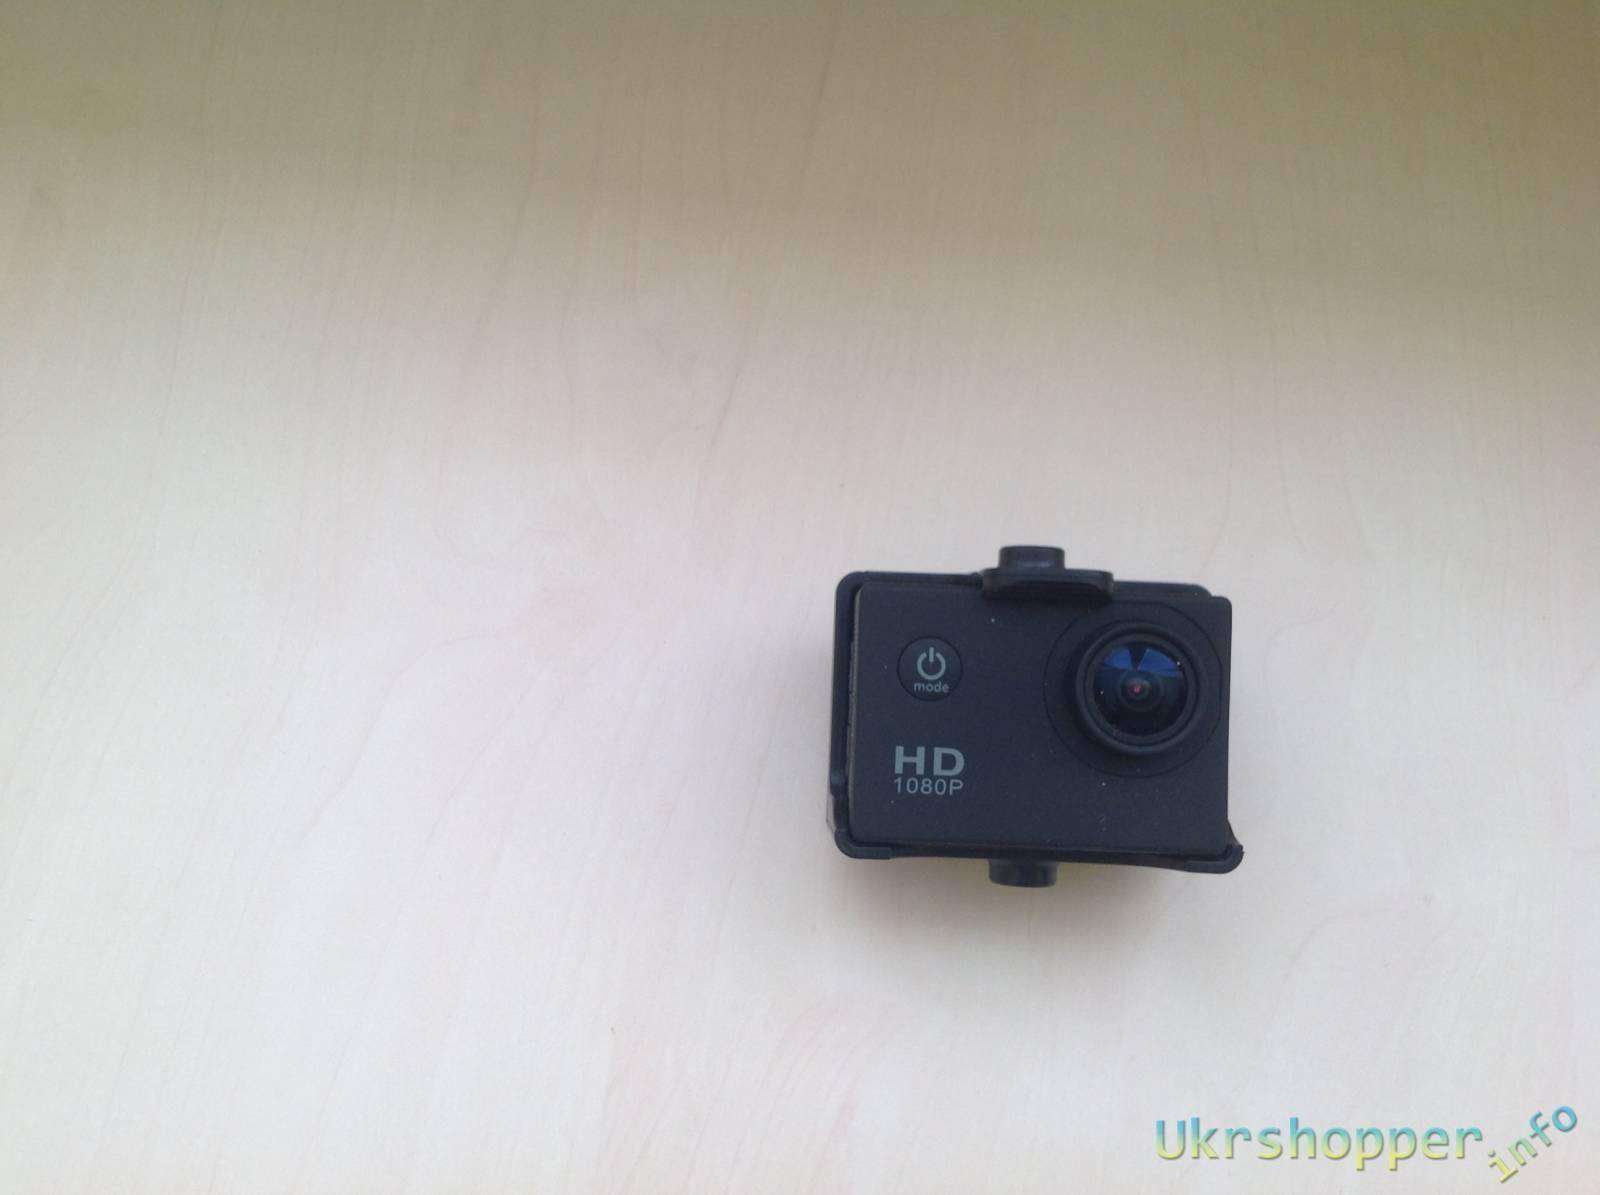 Aliexpress: Экшен камера SJ4000+ сравнение с GoPro